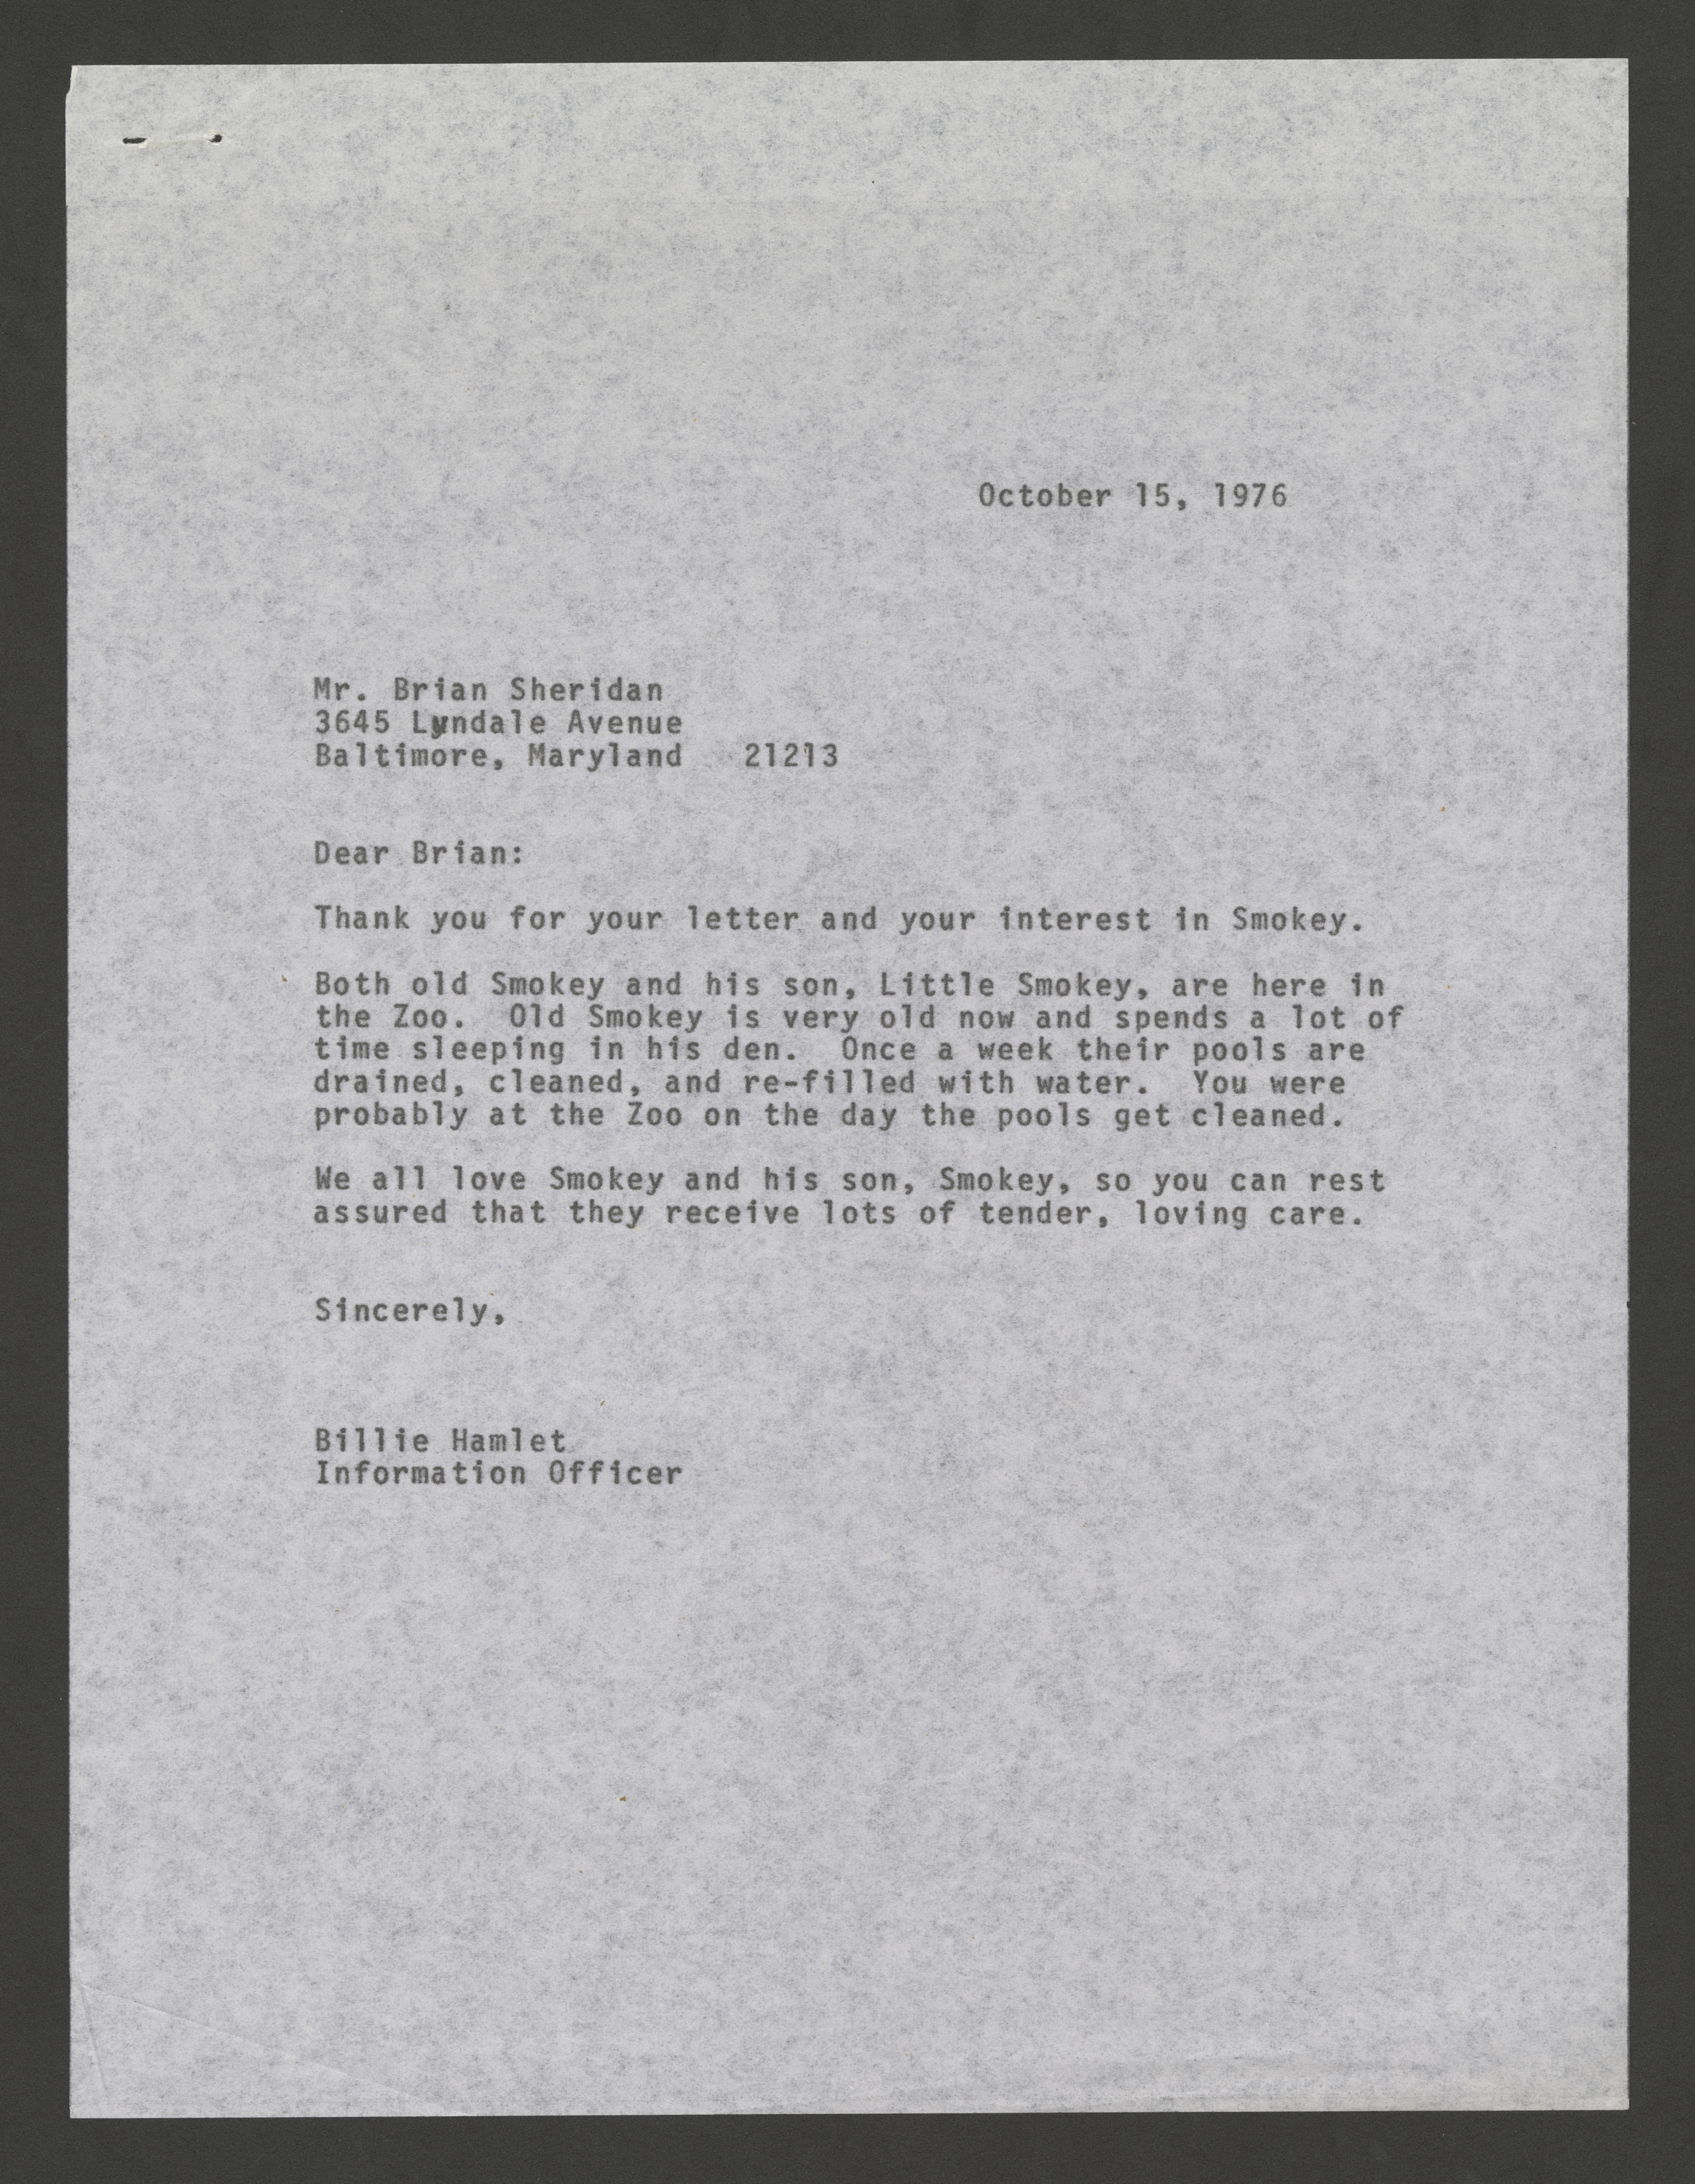 Letter from Billie Hamlet addressed to Brian Sheridan.